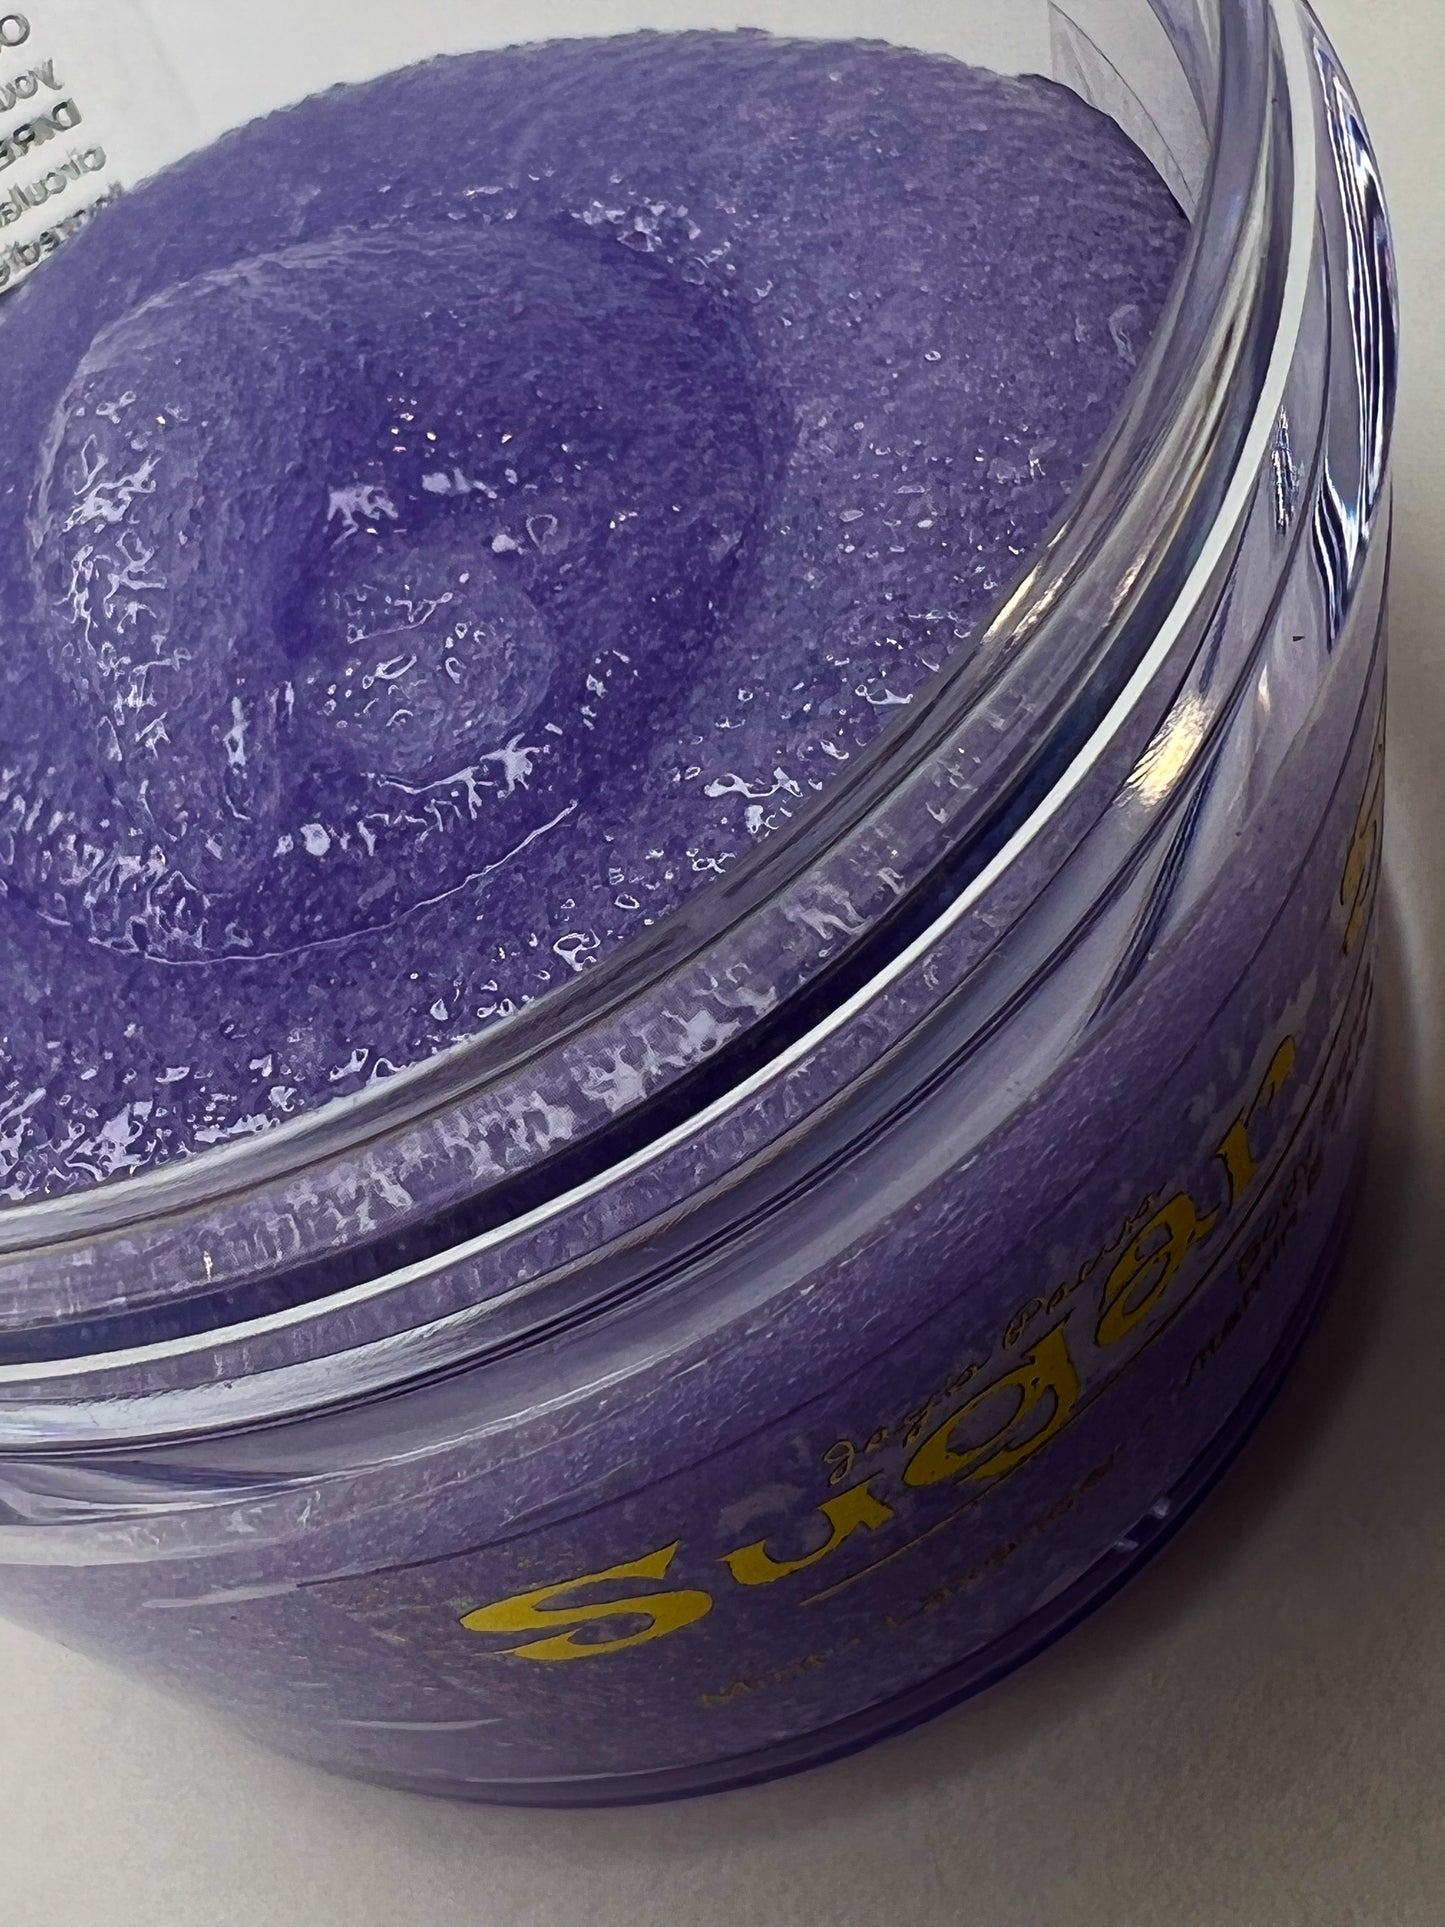 Jay’s Paws Luxury Sugar Scrub - with Vitamin E, Jojoba Oil, Argan Oil. -Paraben-Free Mint and Lavender Scented